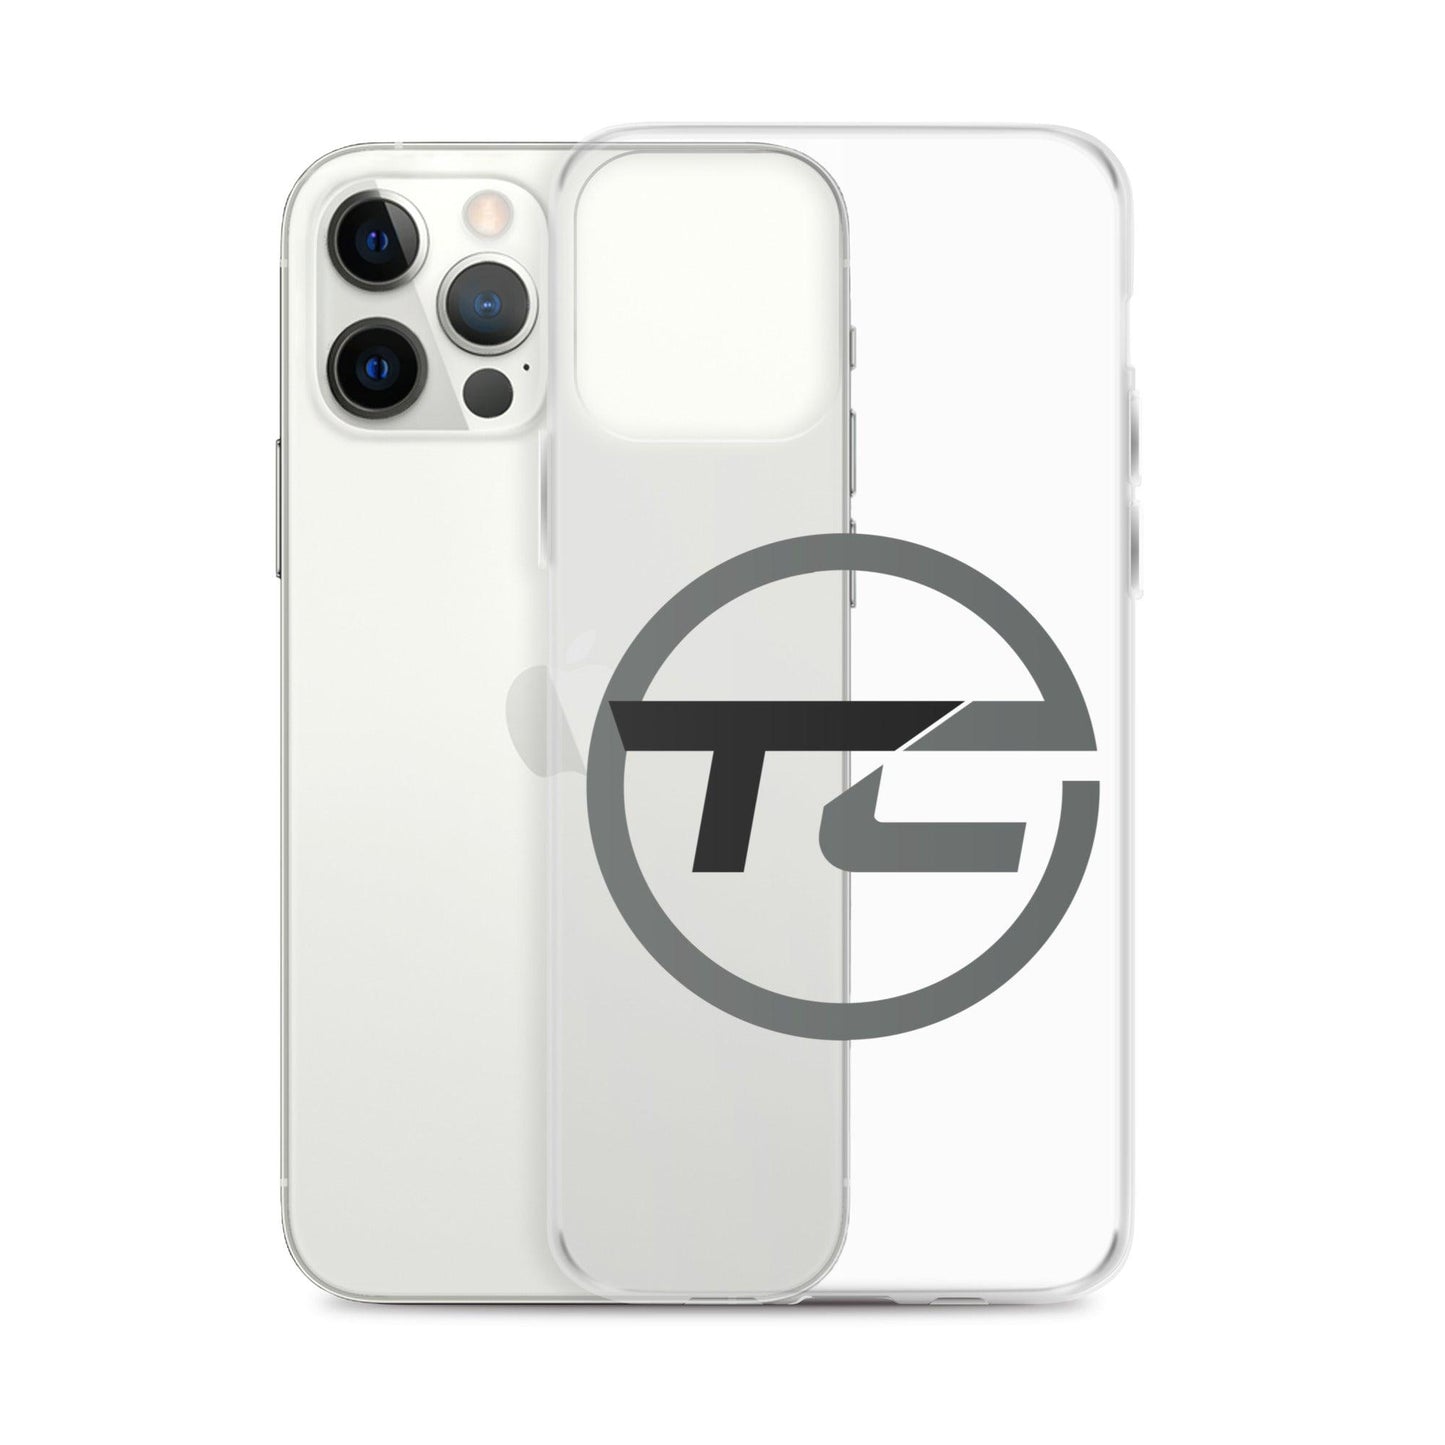 Trey Cabbage “TC” iPhone Case - Fan Arch